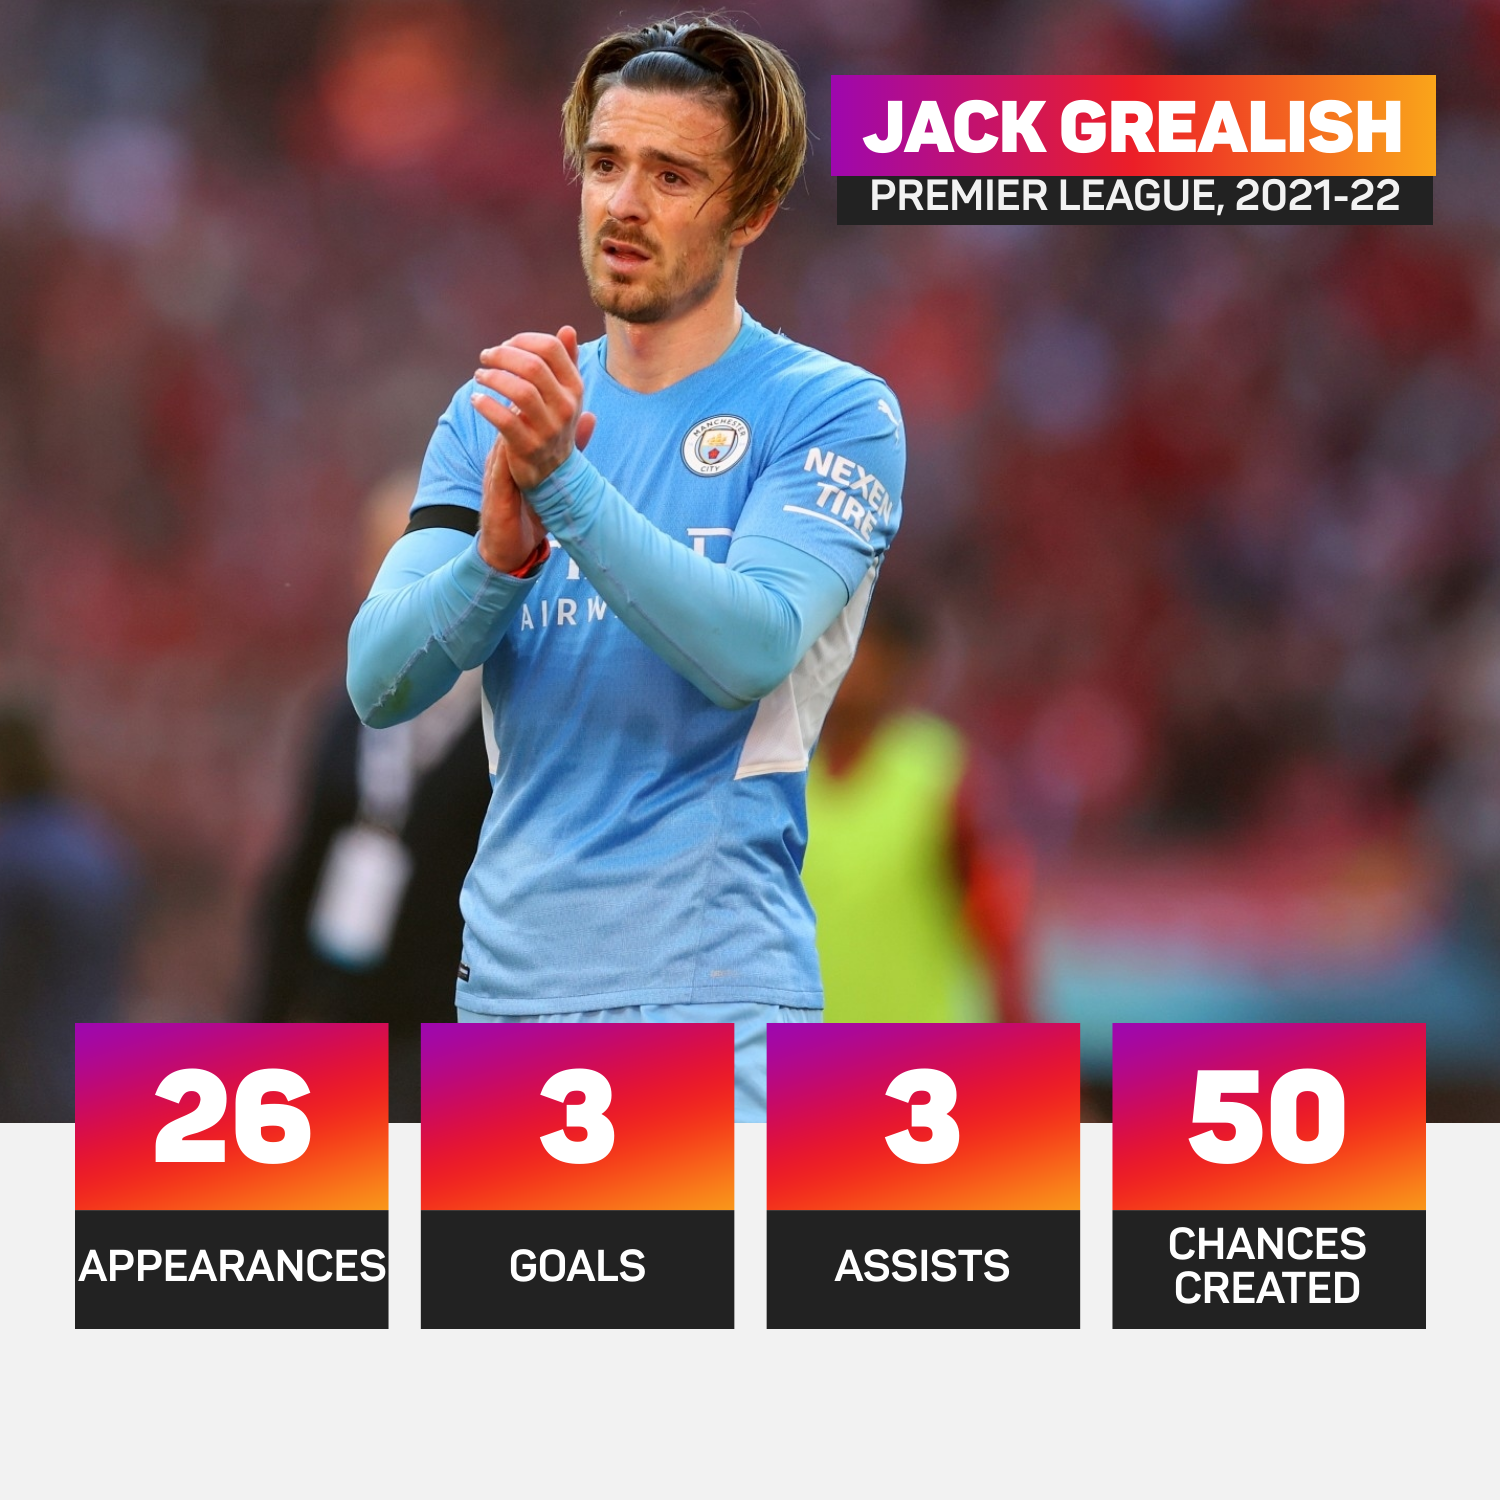 Jack Grealish scored just three Premier League goals last season